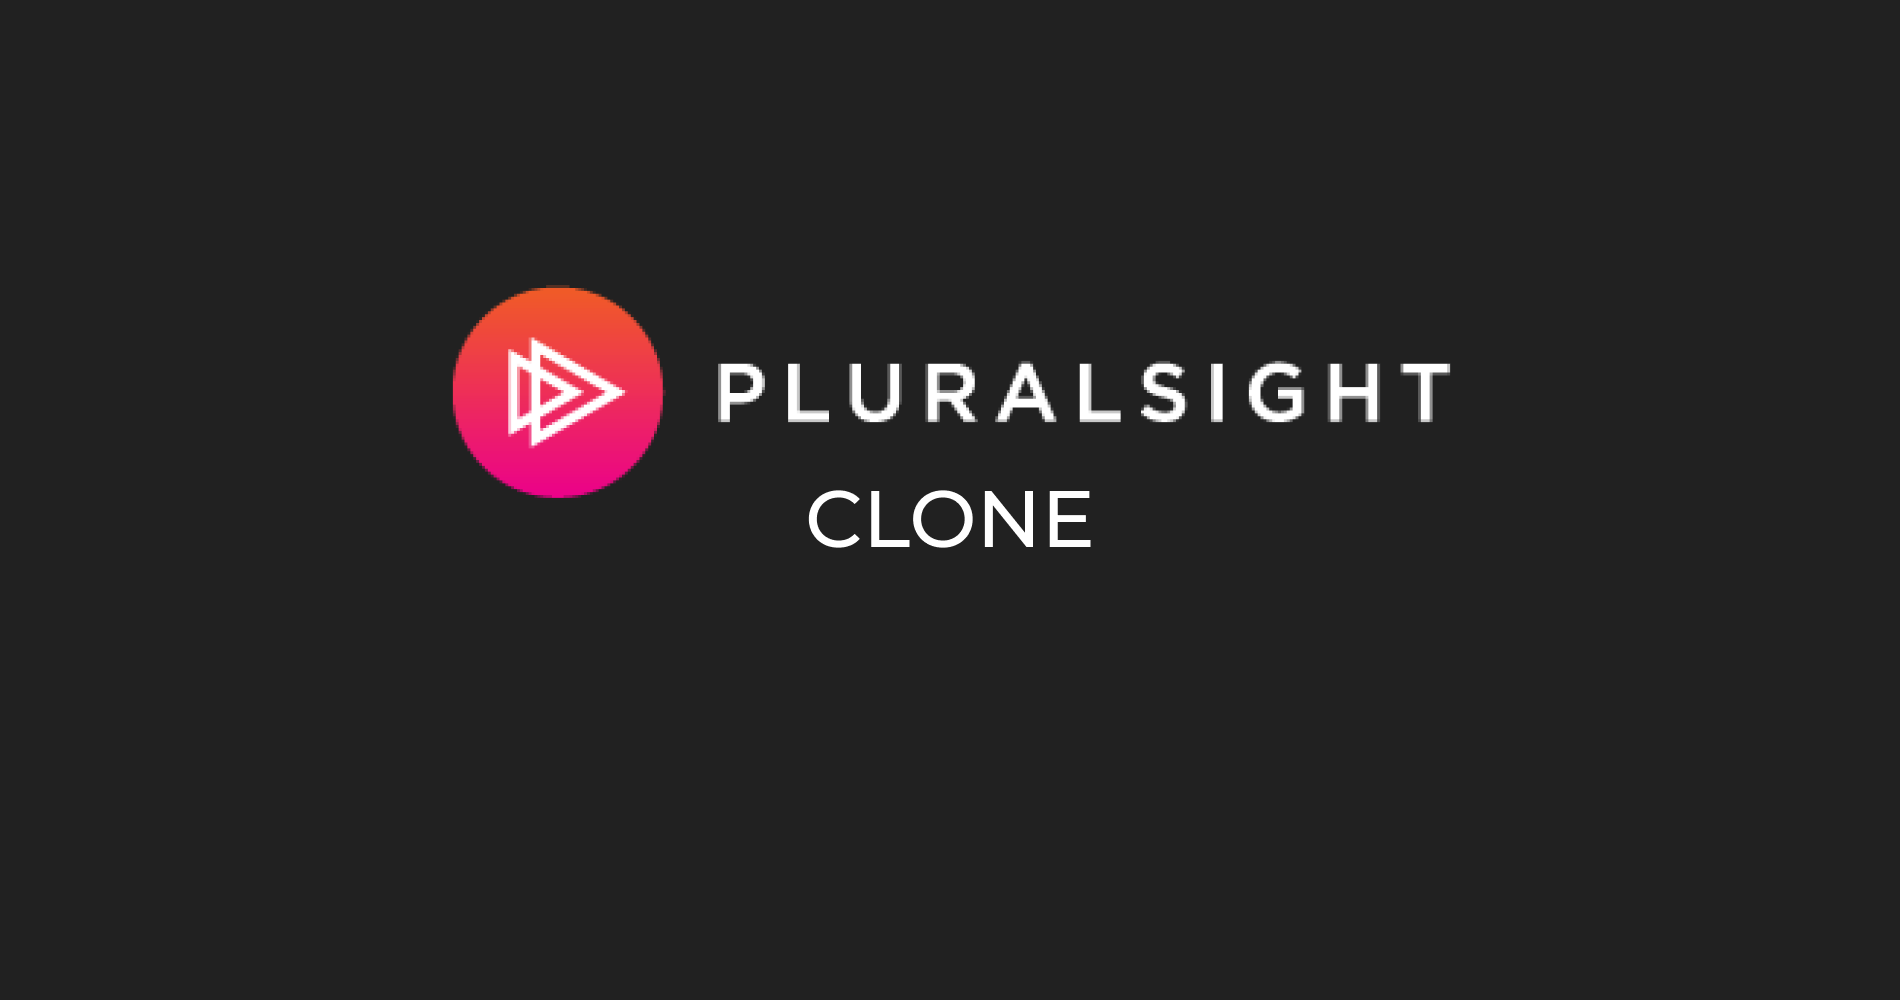 Pluralsight clone